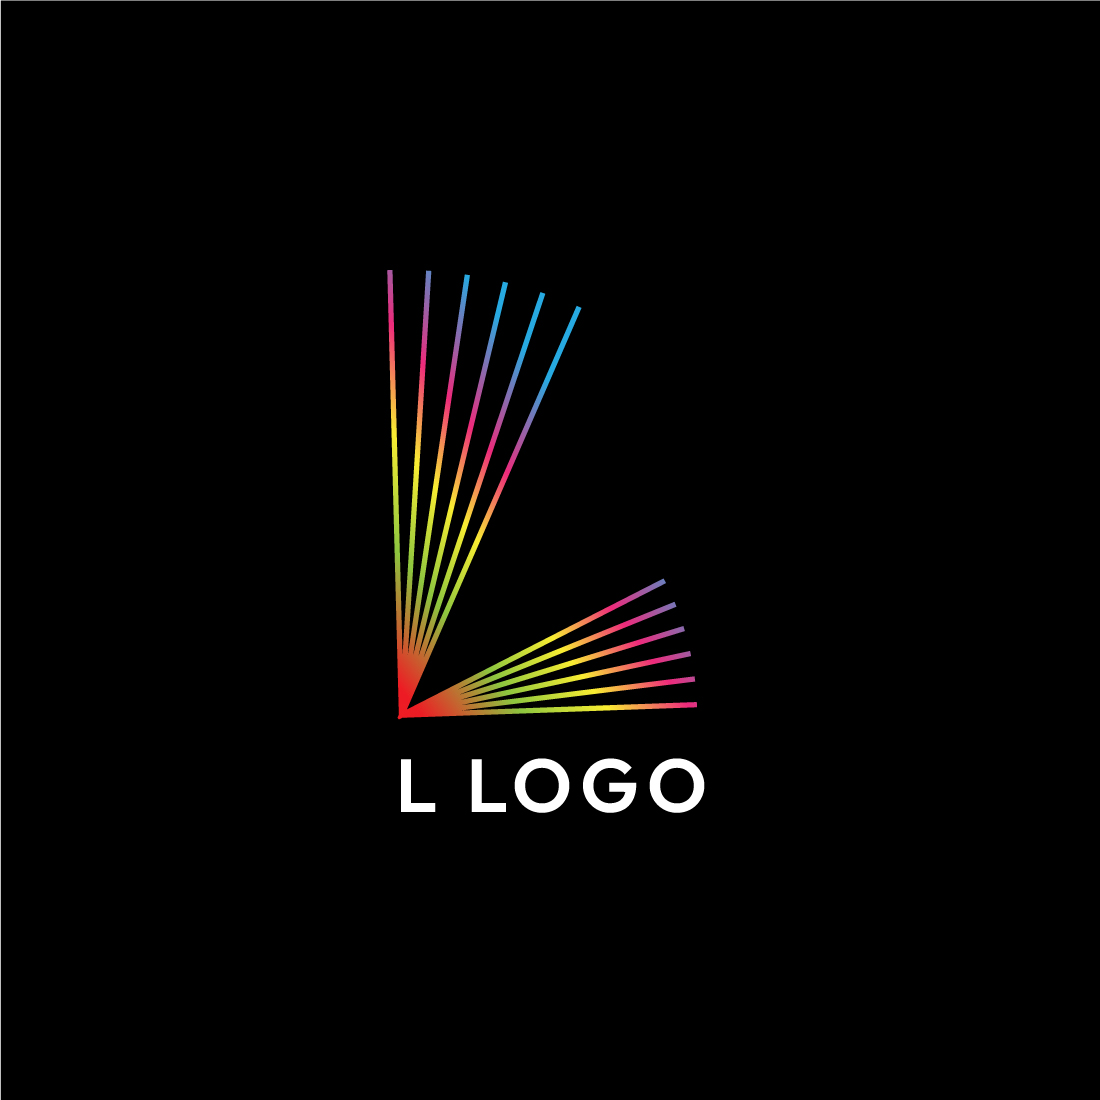 Sleek Line Art Letter L Logo Design - Professional Branding Solution cover image.